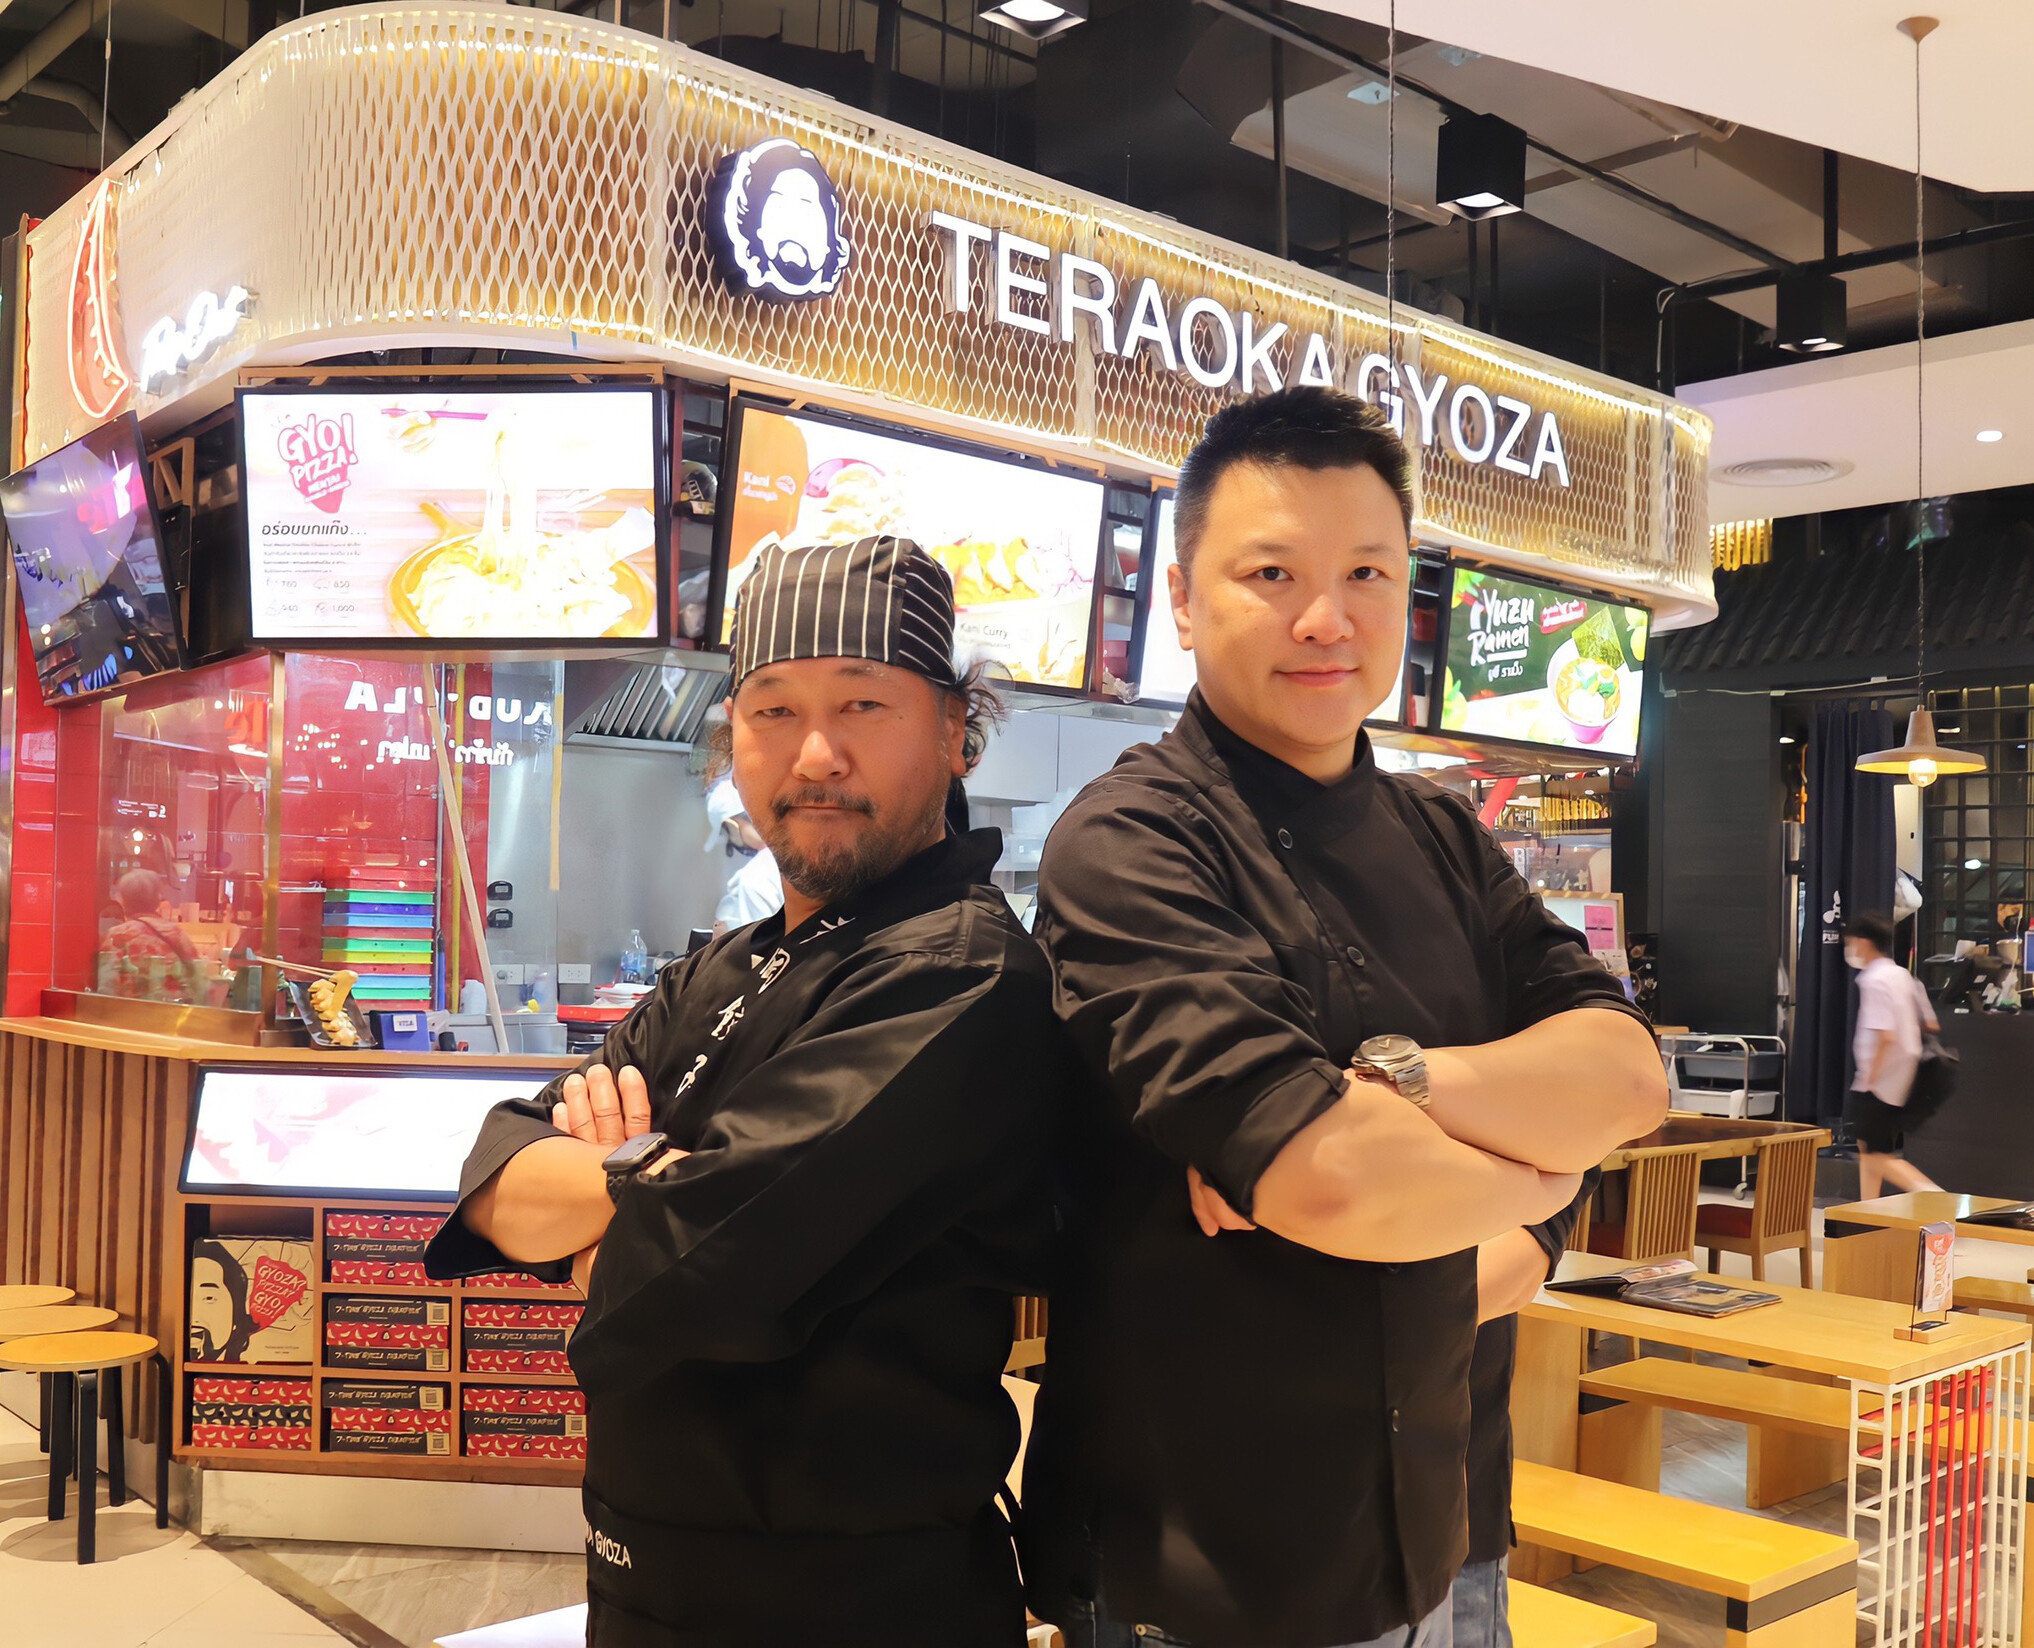 Teraoka Gyoza จับมือ Collab เชฟกิ๊ก-กมล รังสรรค์ 4 เมนูพิเศษ สไตล์ไทย-จีน-ญี่ปุ่น กับความอร่อยแบบเชฟกระทะเหล็ก